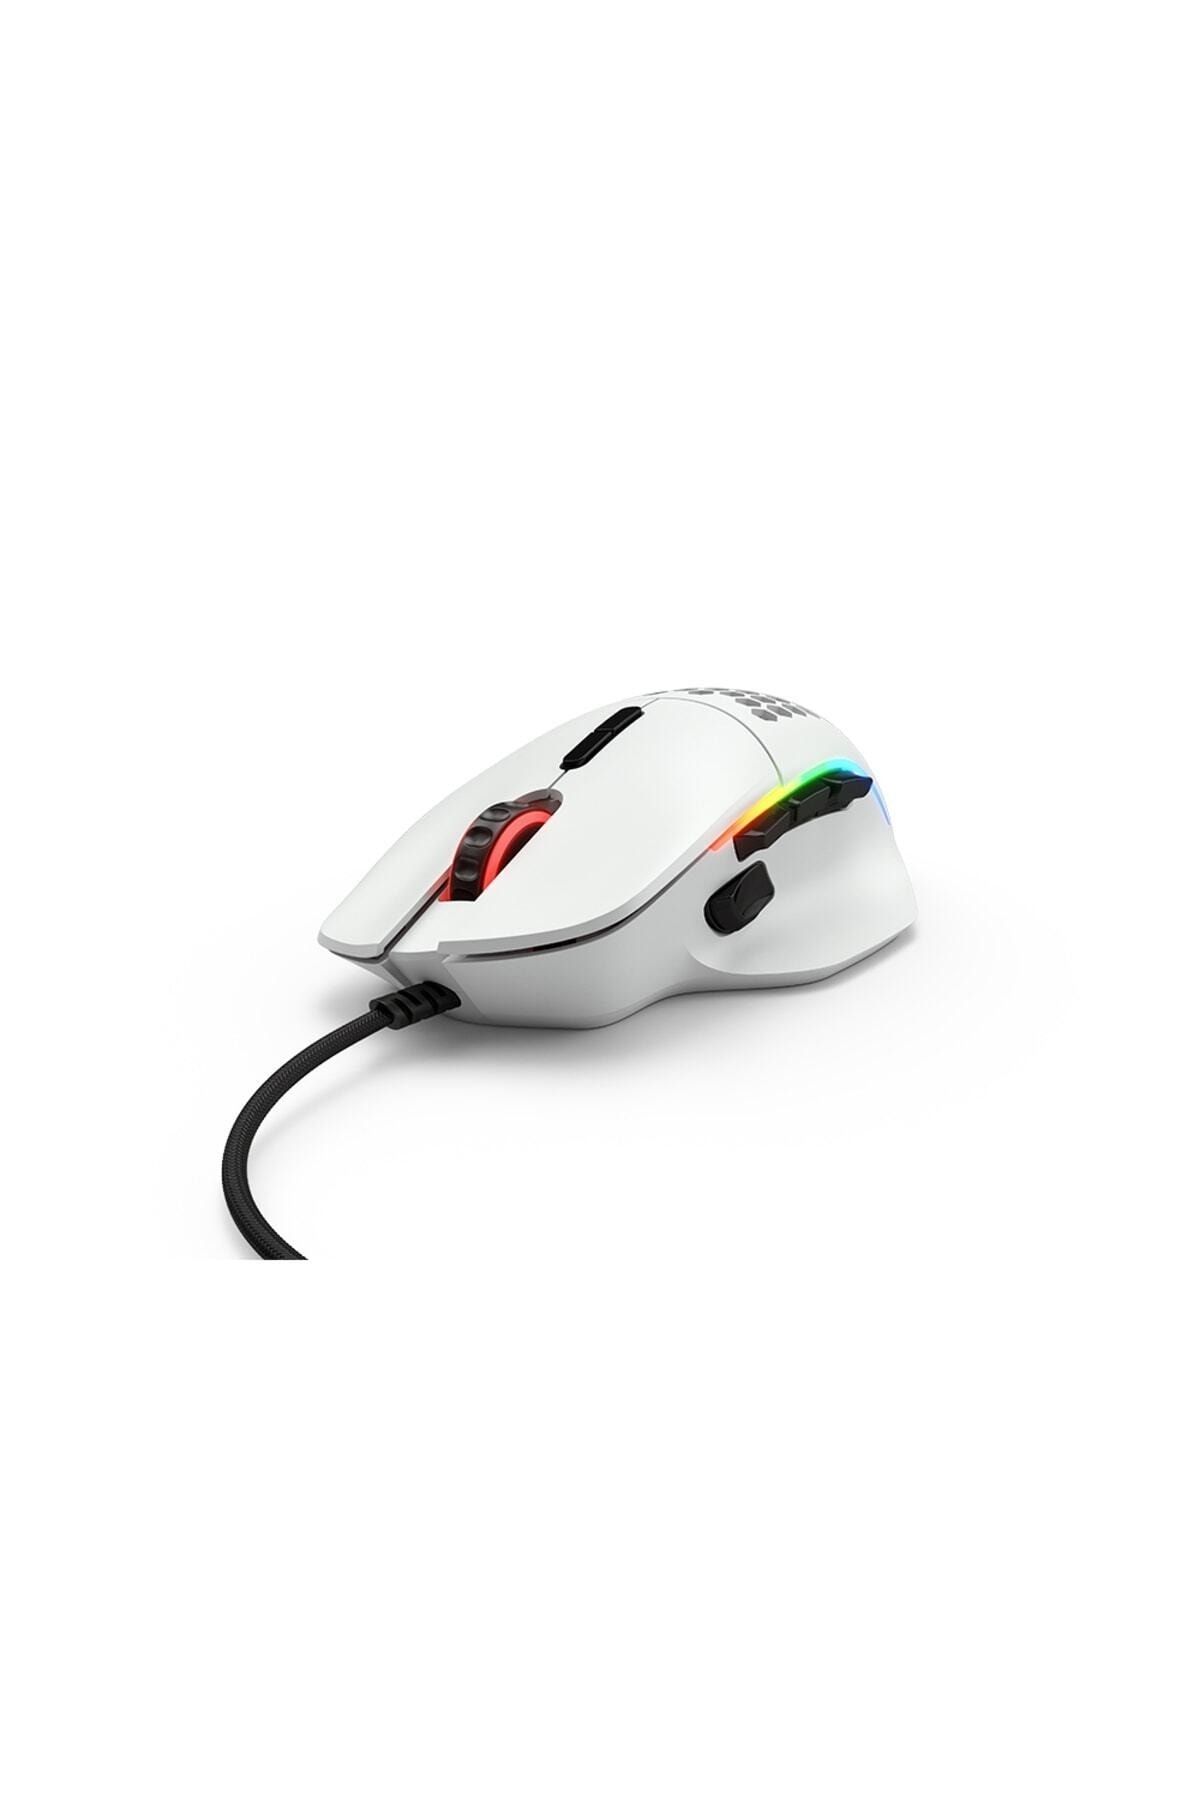 Glorious Model I Kablolu Mat Beyaz Rgb Oyuncu Mouse 69gr